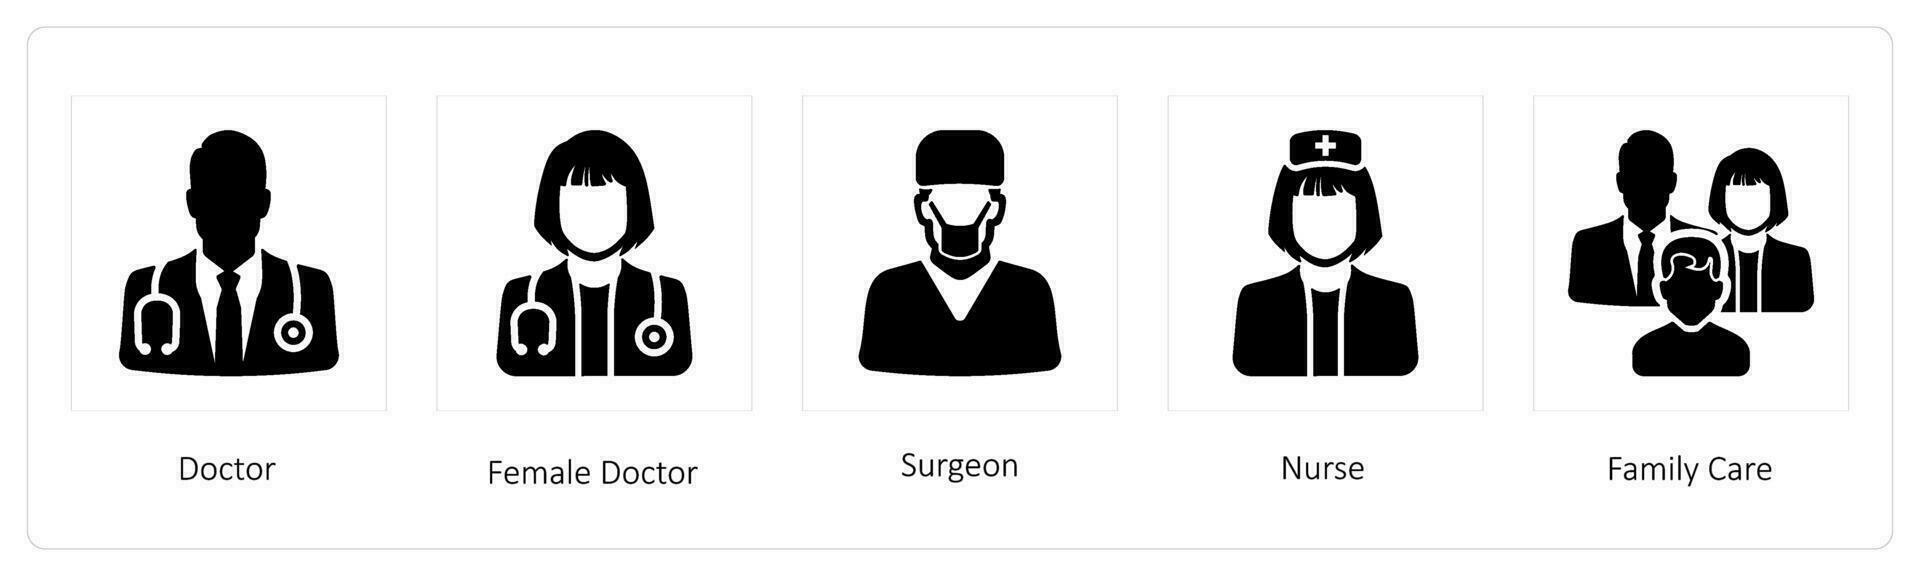 dokter, vrouw dokter, chirurg vector